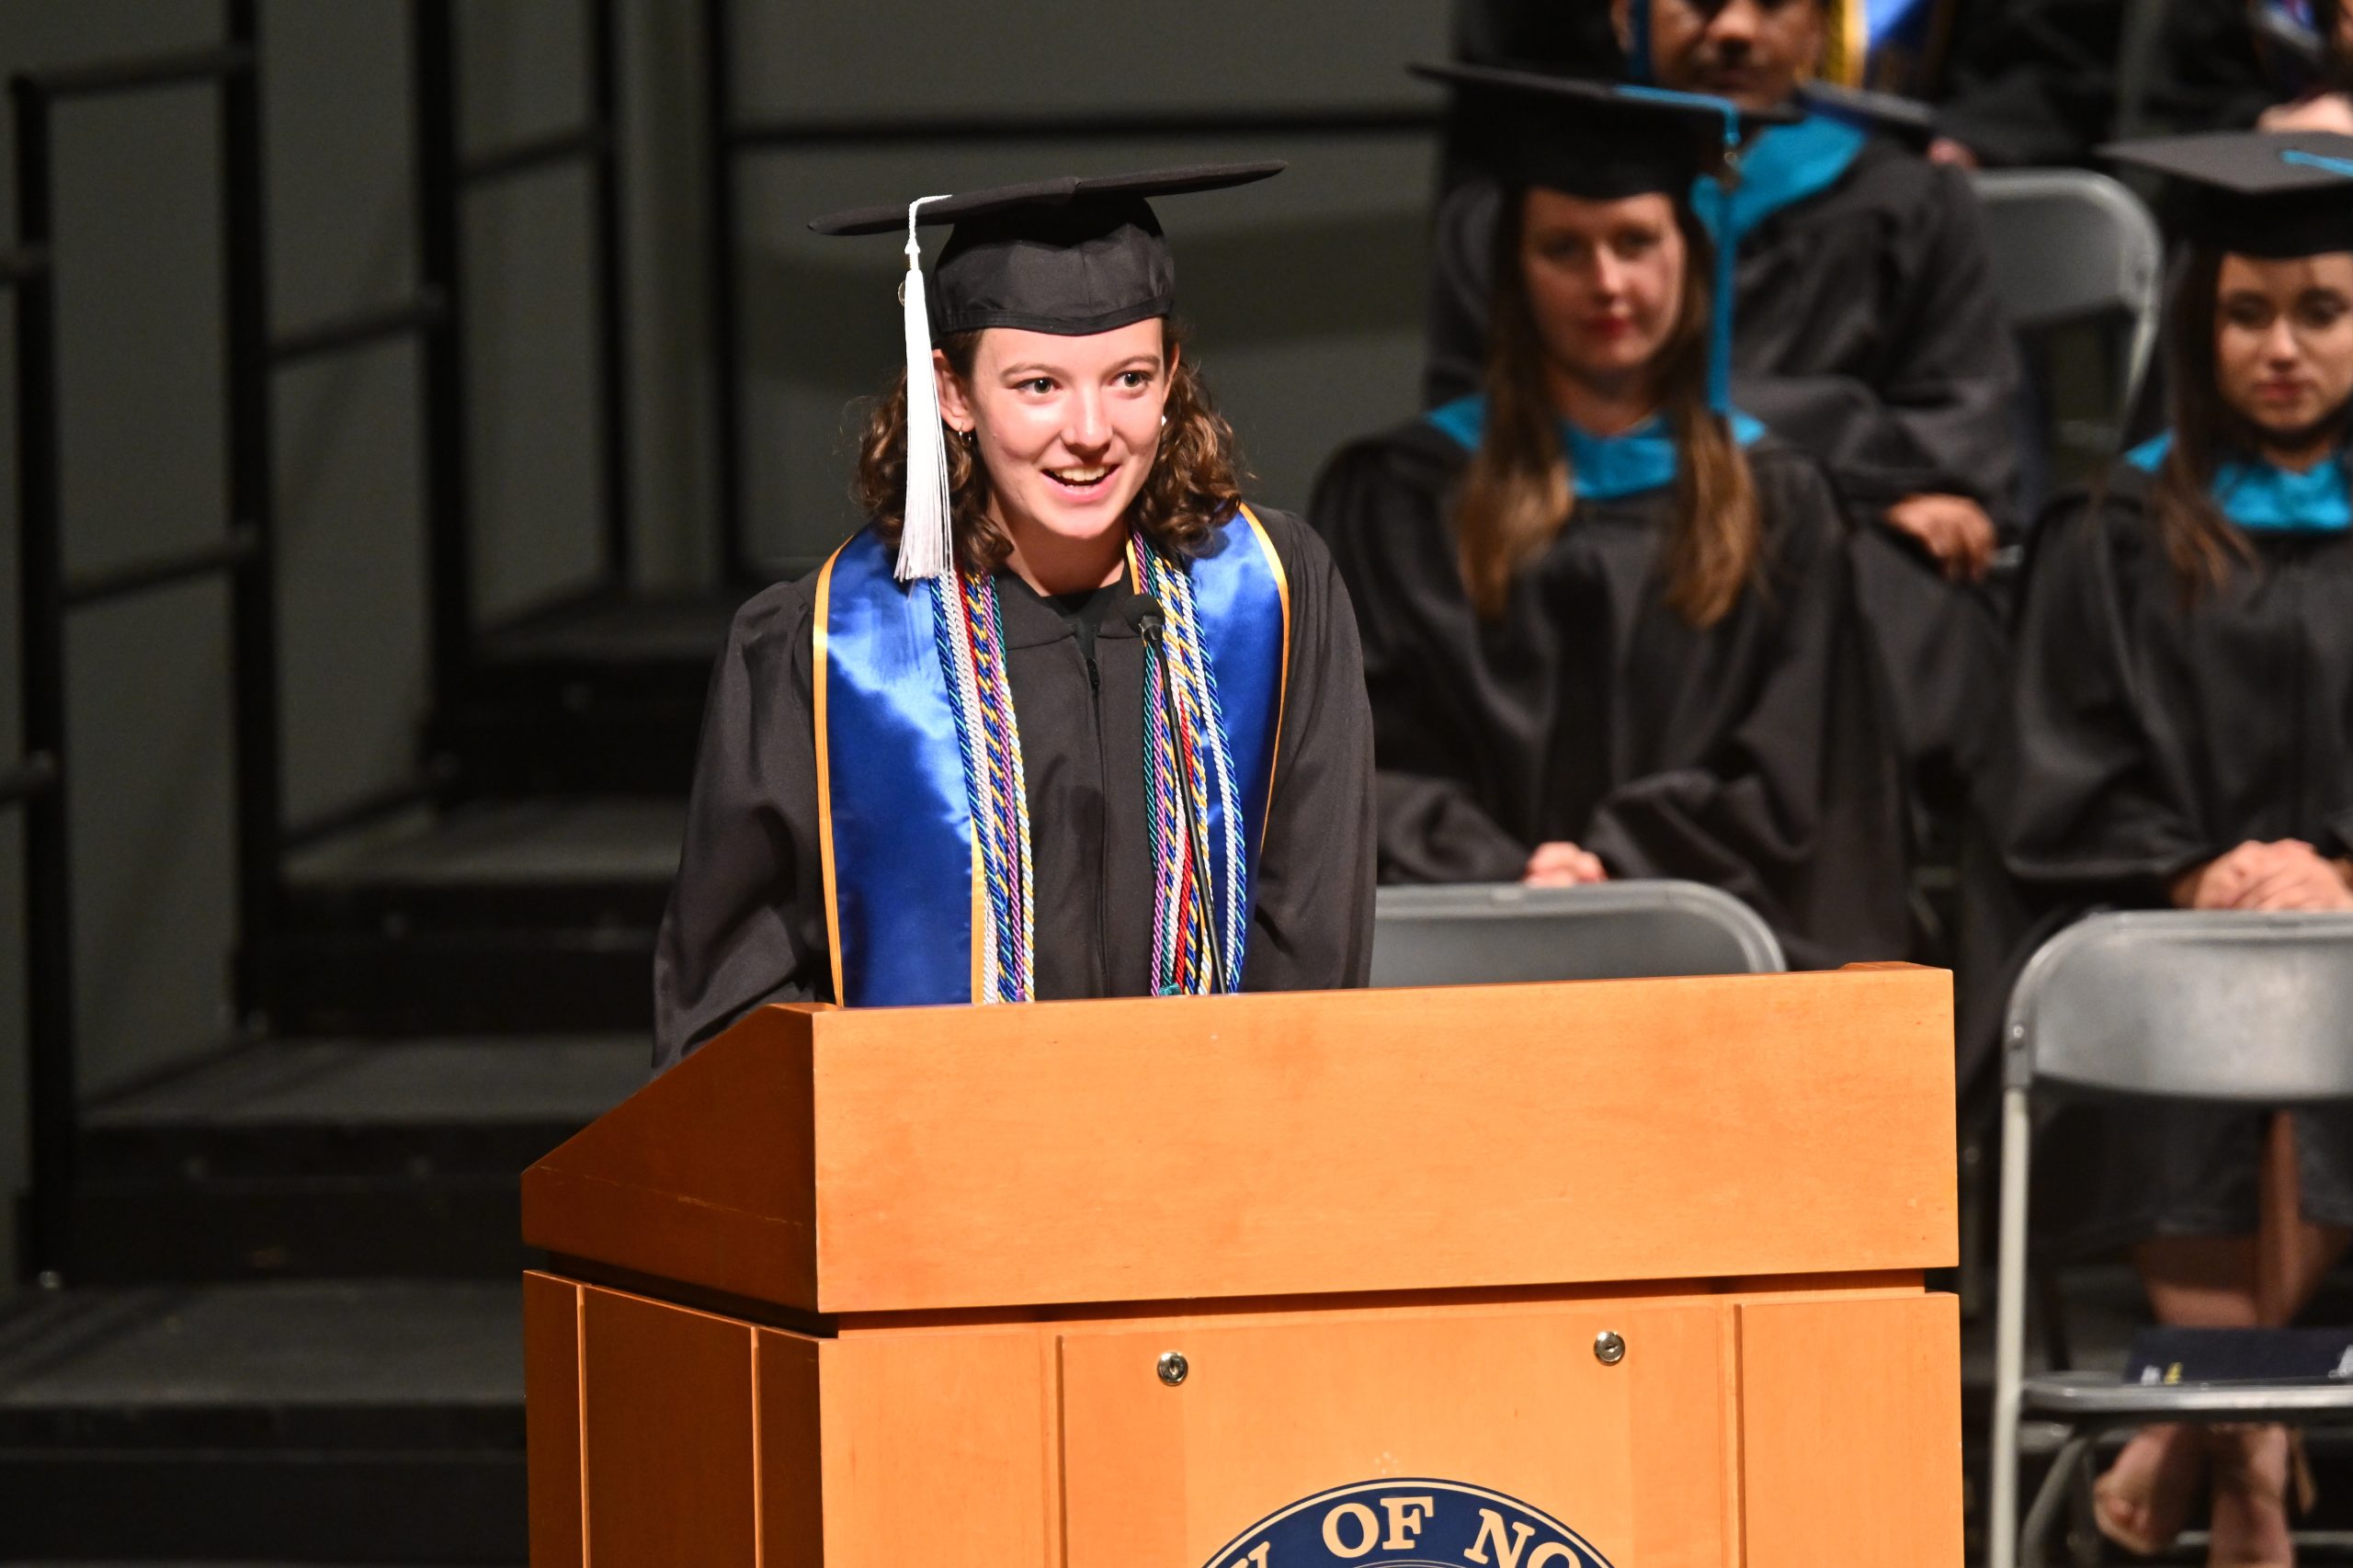 Economics and global affairs major Hannah Reynolds addresses the Keough School graduates.